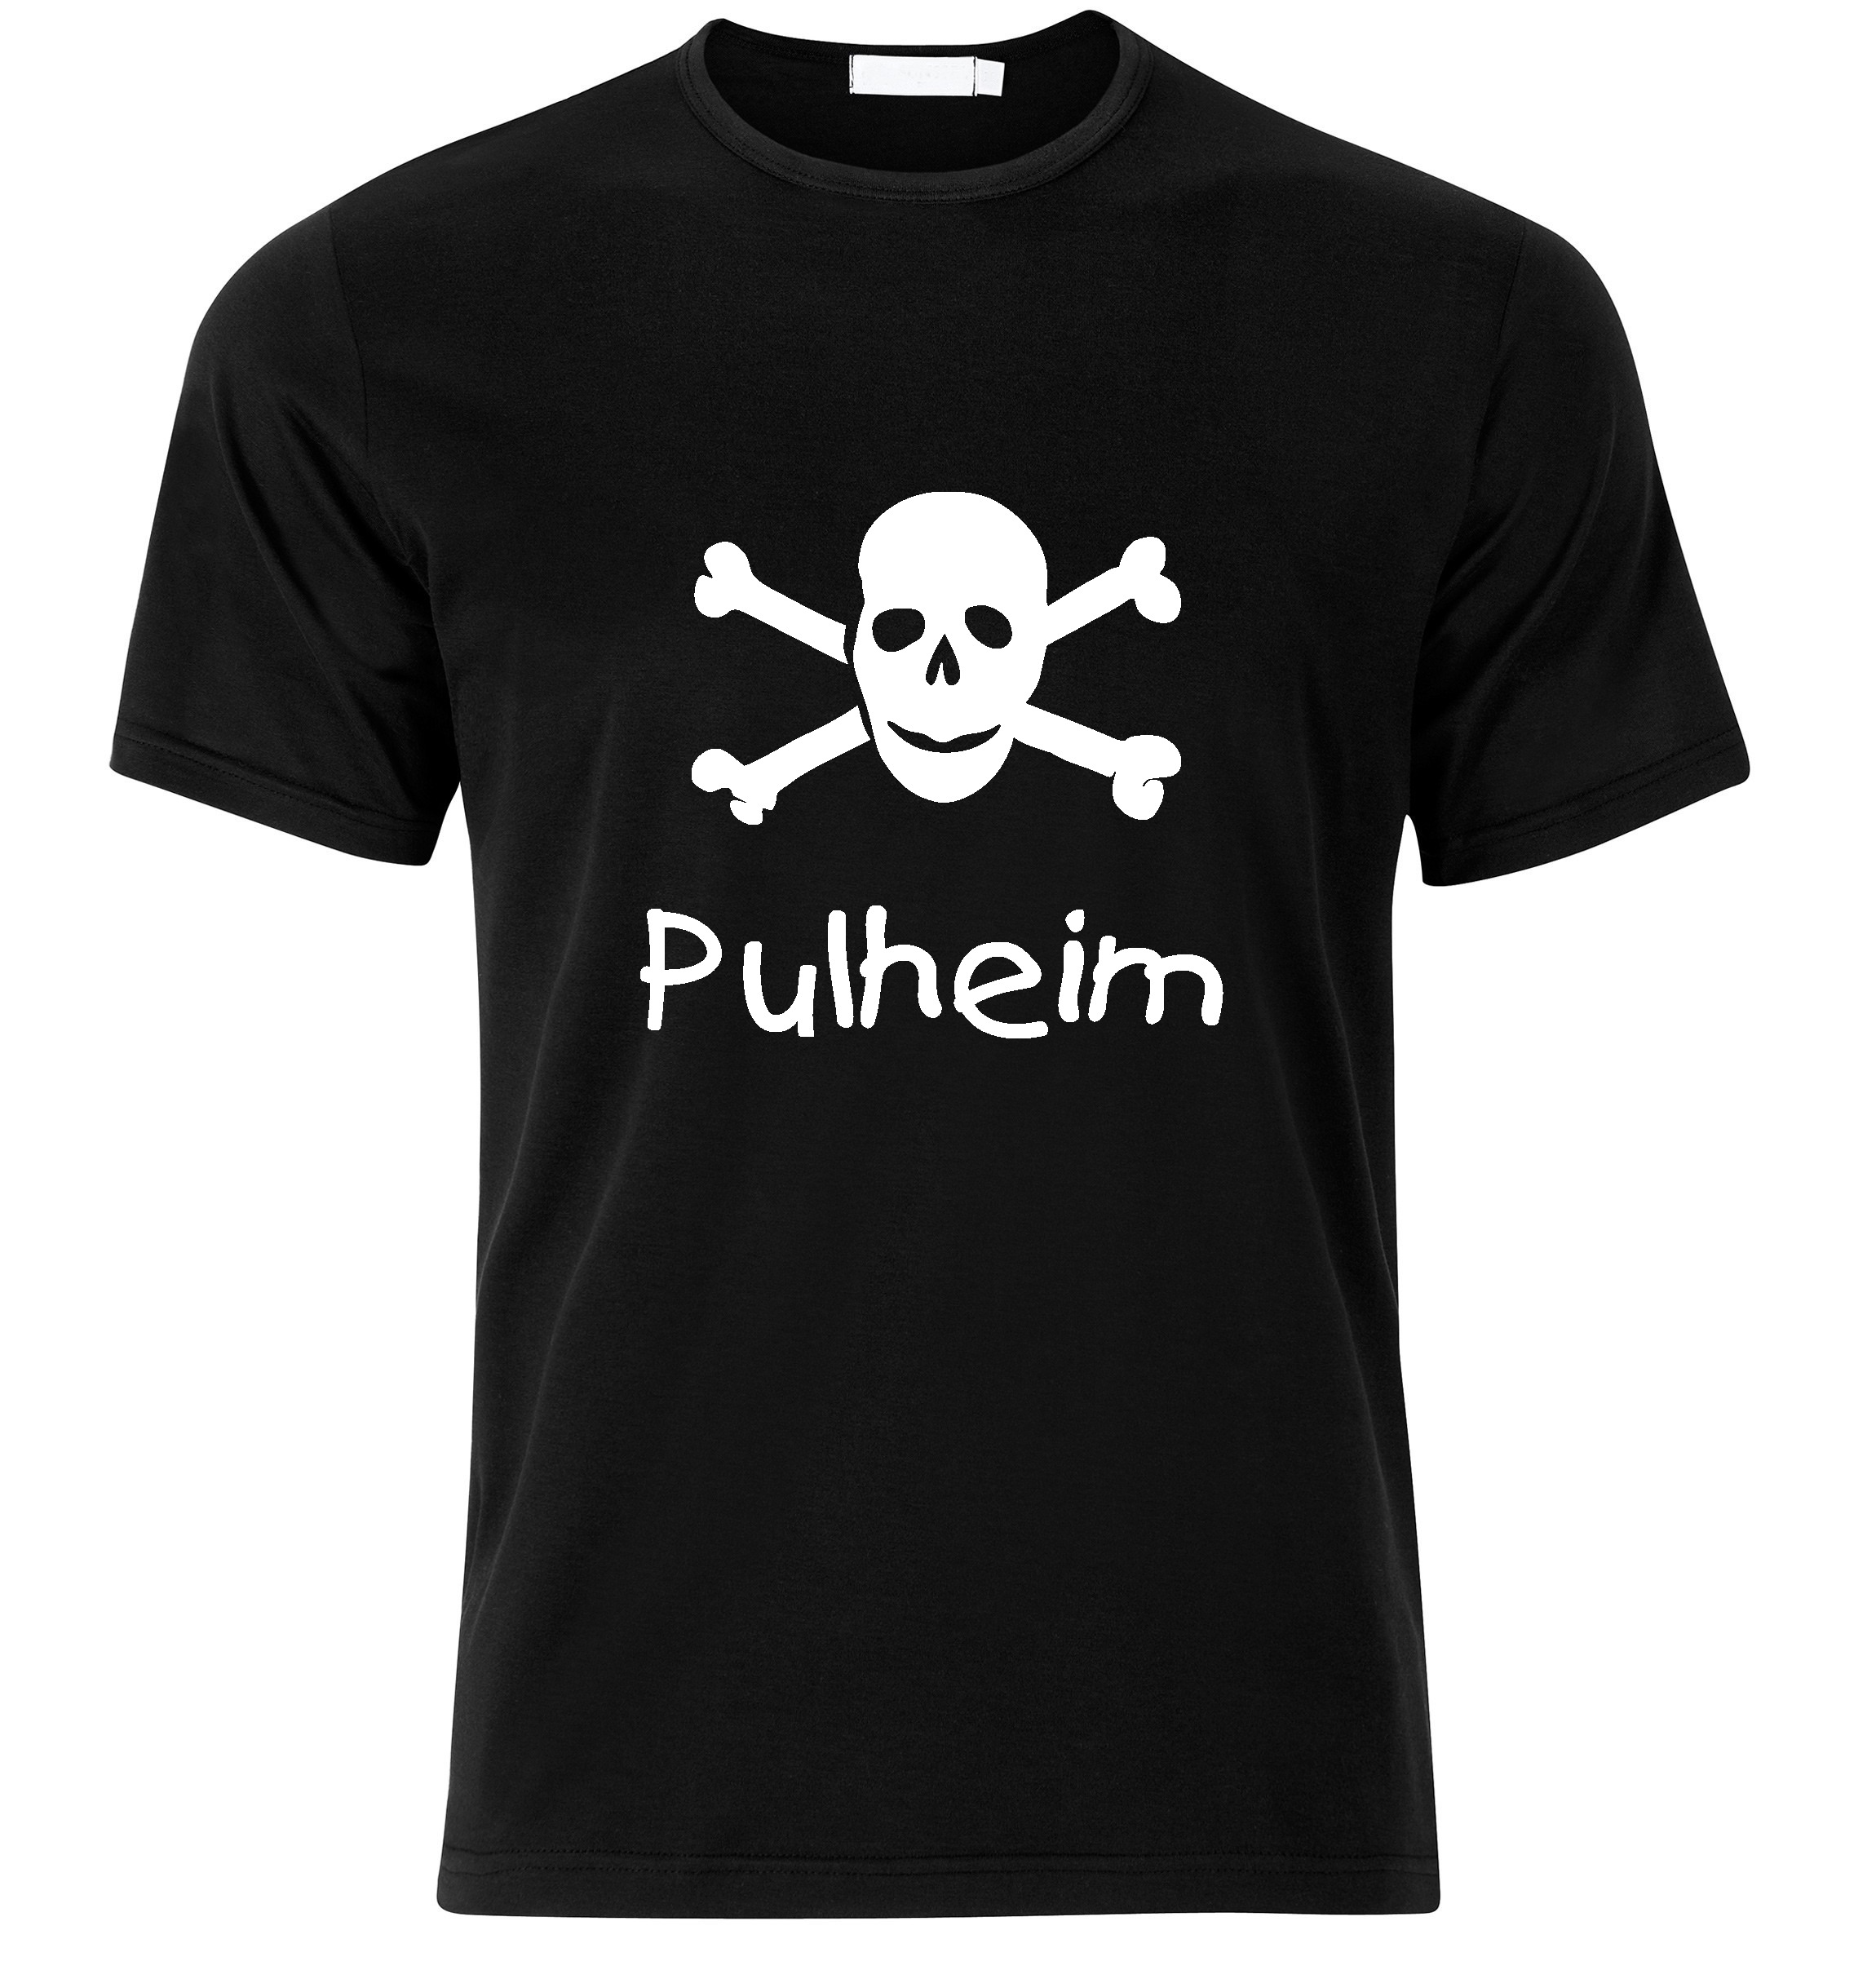 T-Shirt Pulheim Jolly Roger, Totenkopf